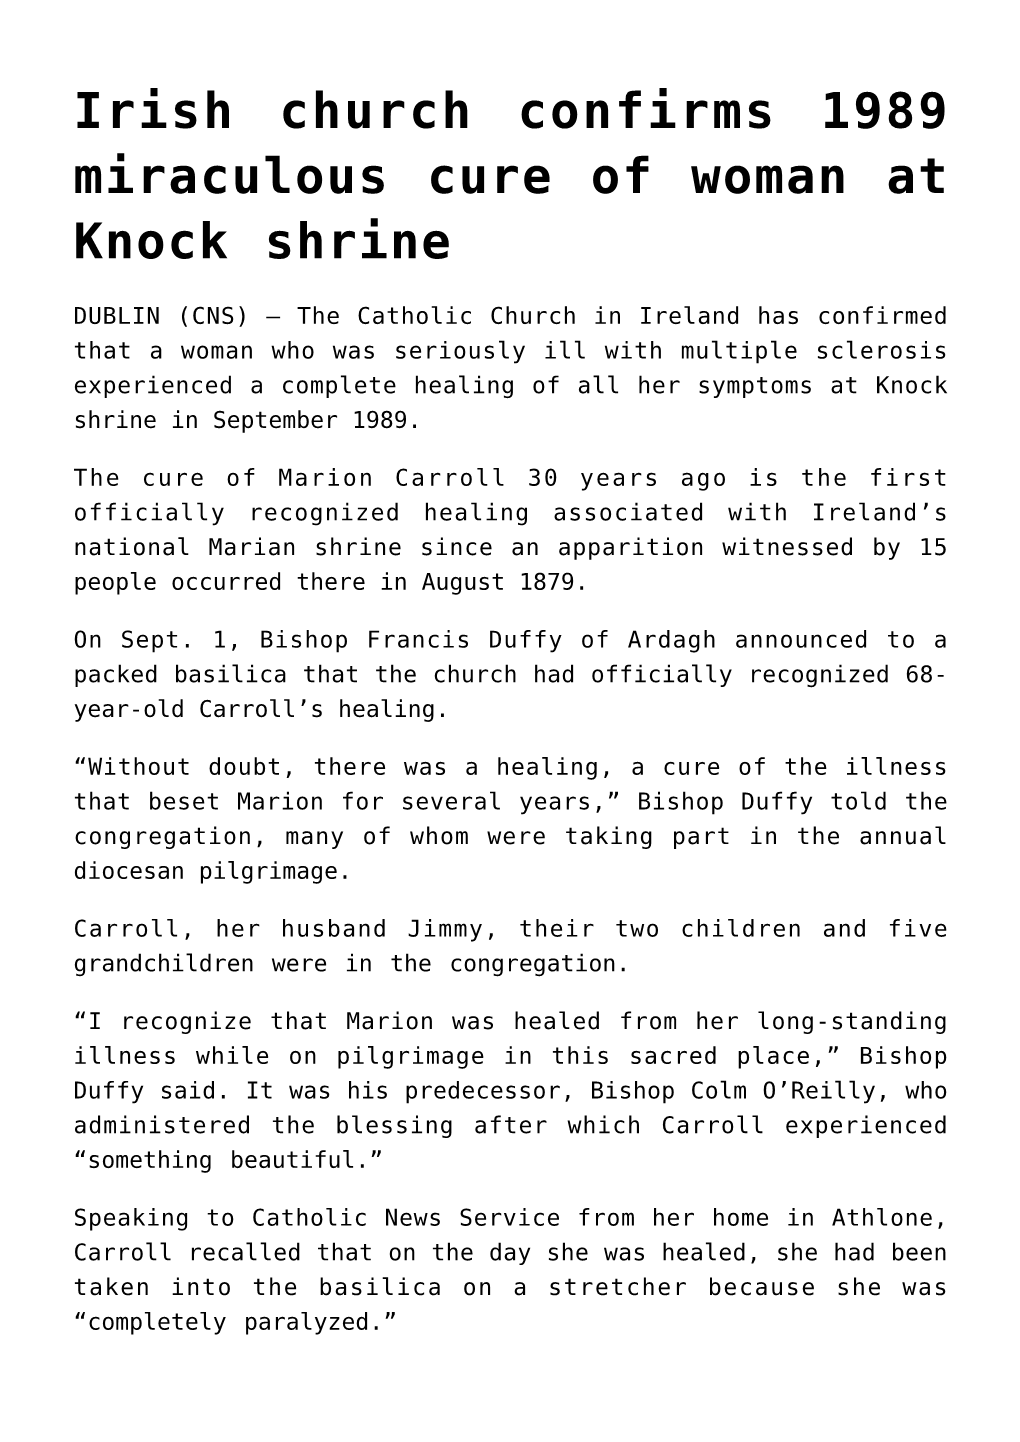 Irish Church Confirms 1989 Miraculous Cure of Woman at Knock Shrine